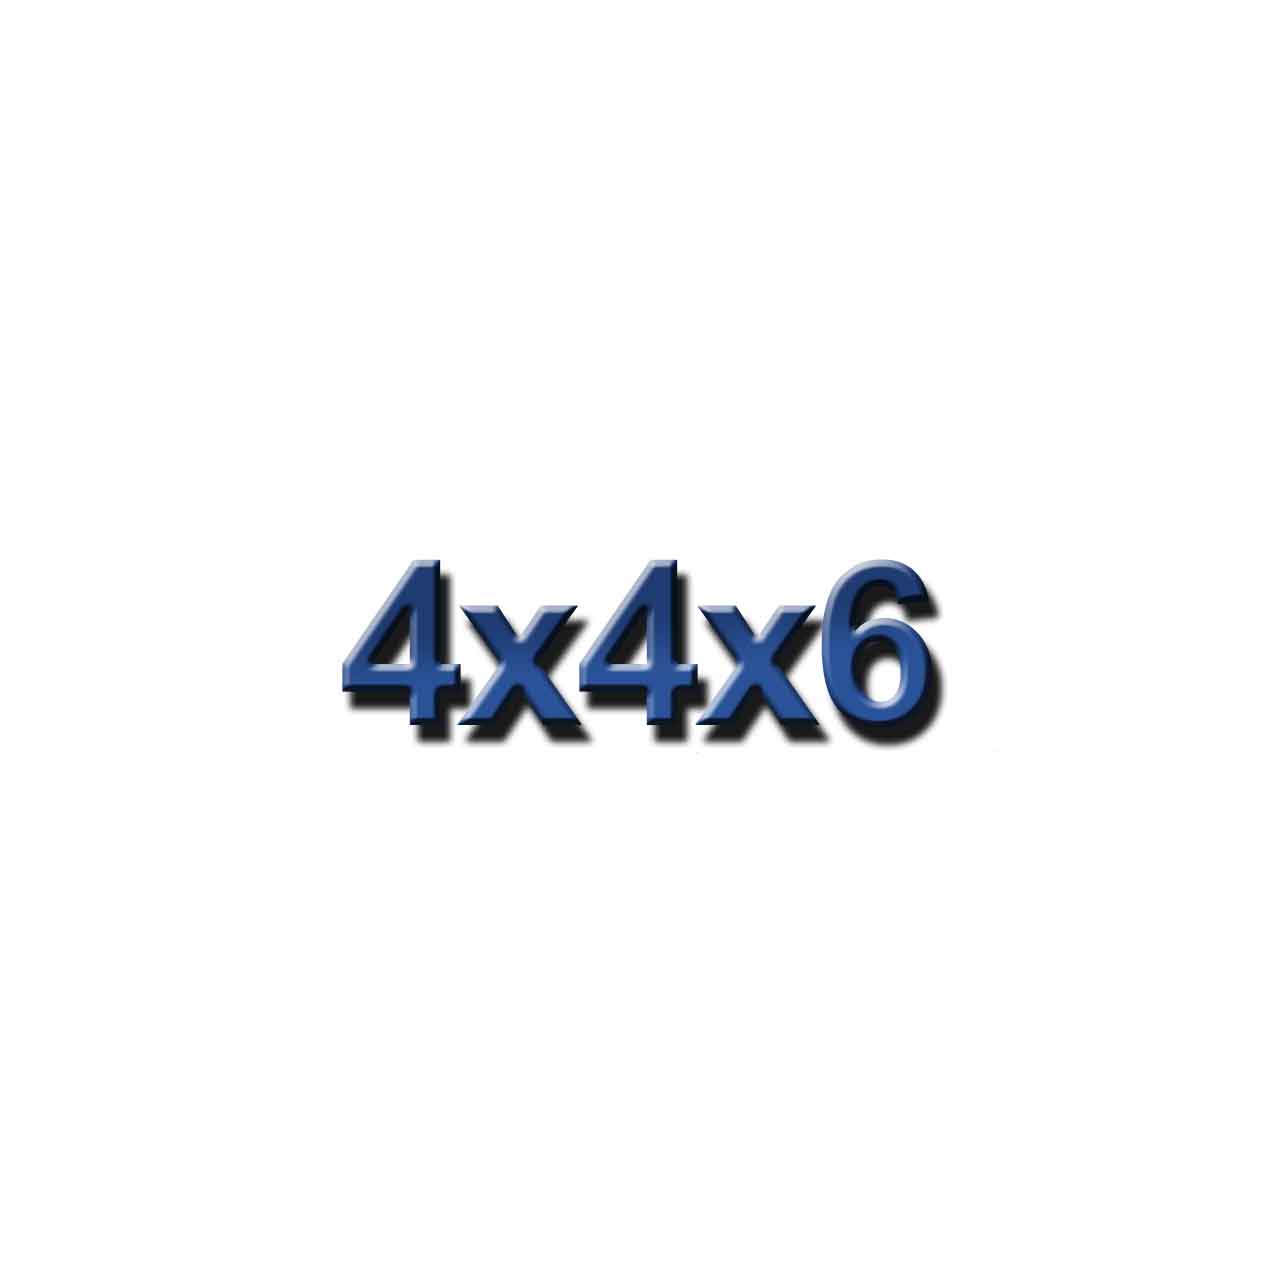 4x4x6